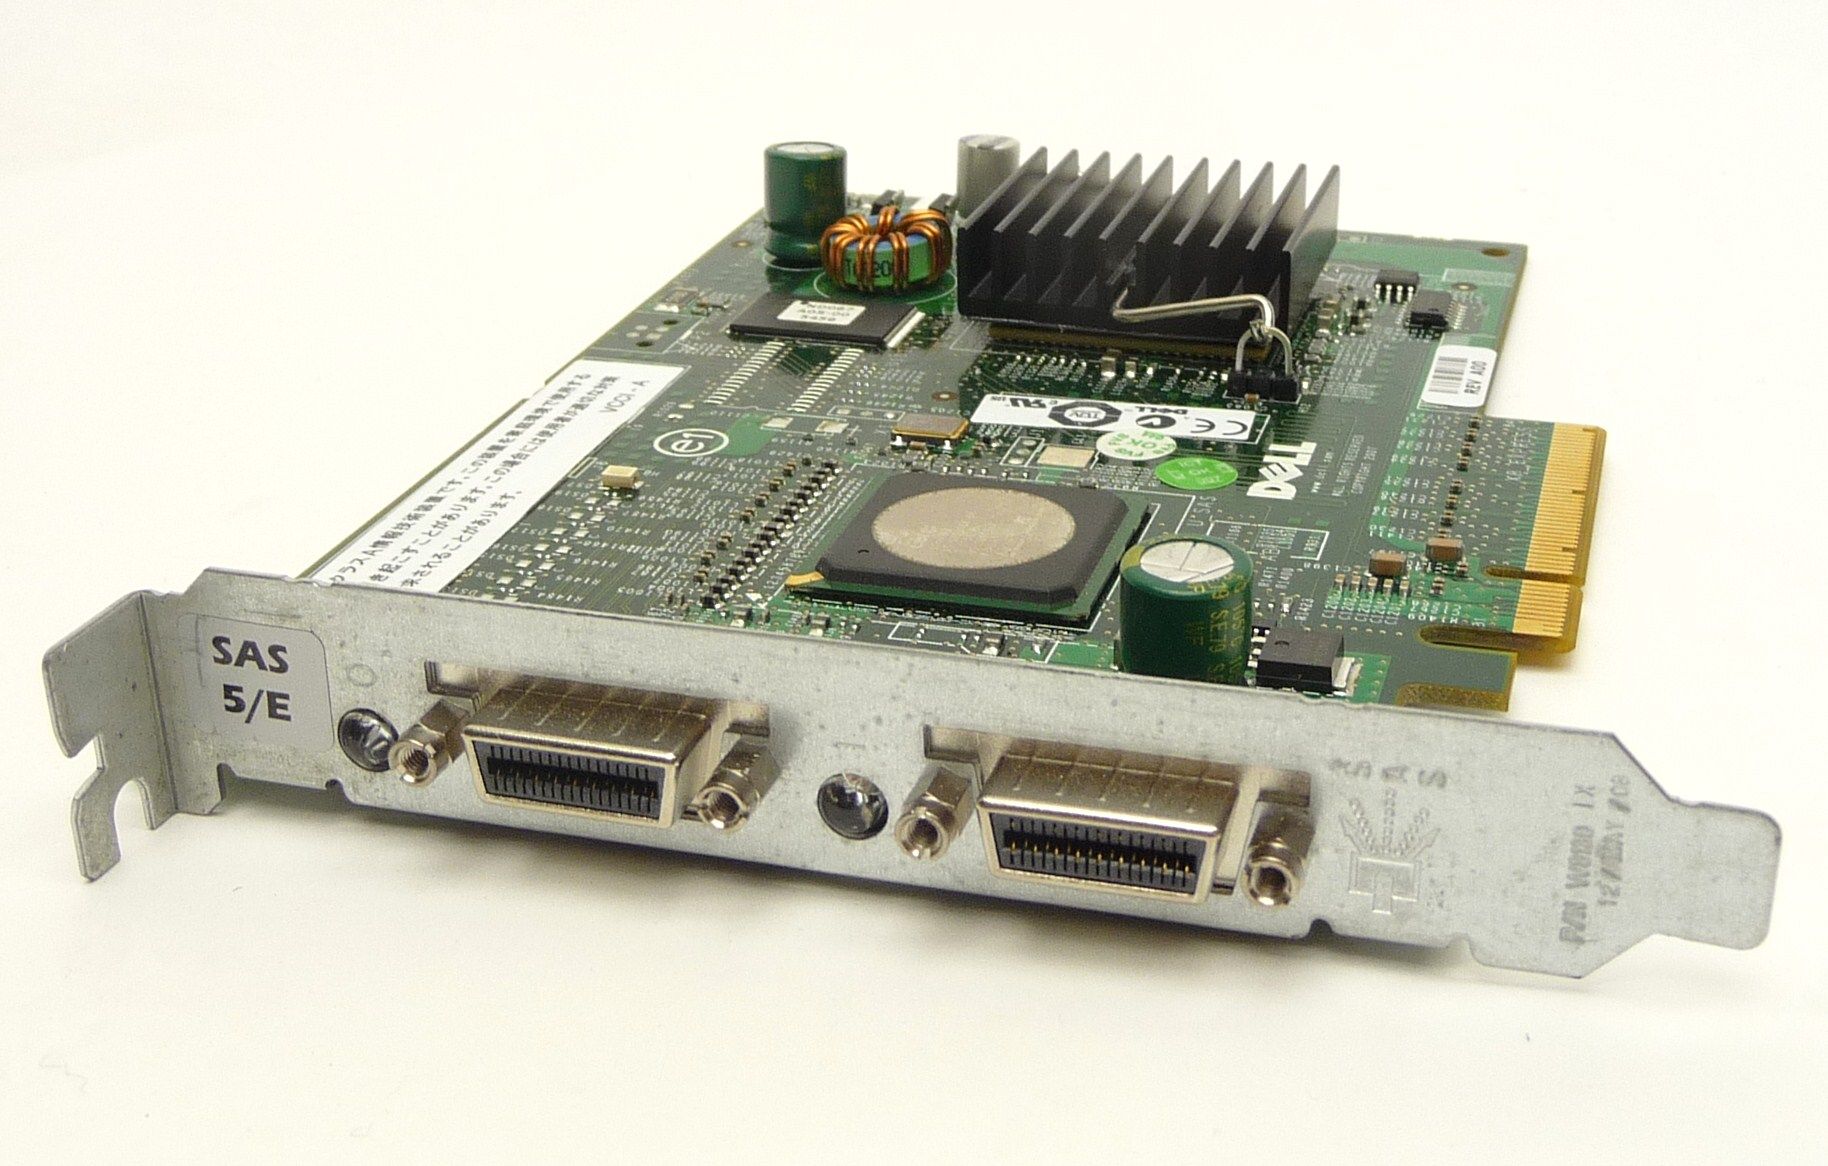  SAS 5/E PCI E DUAL CHANNEL RAID CONTROLLER CARD MODULE E2K UCS 50(A